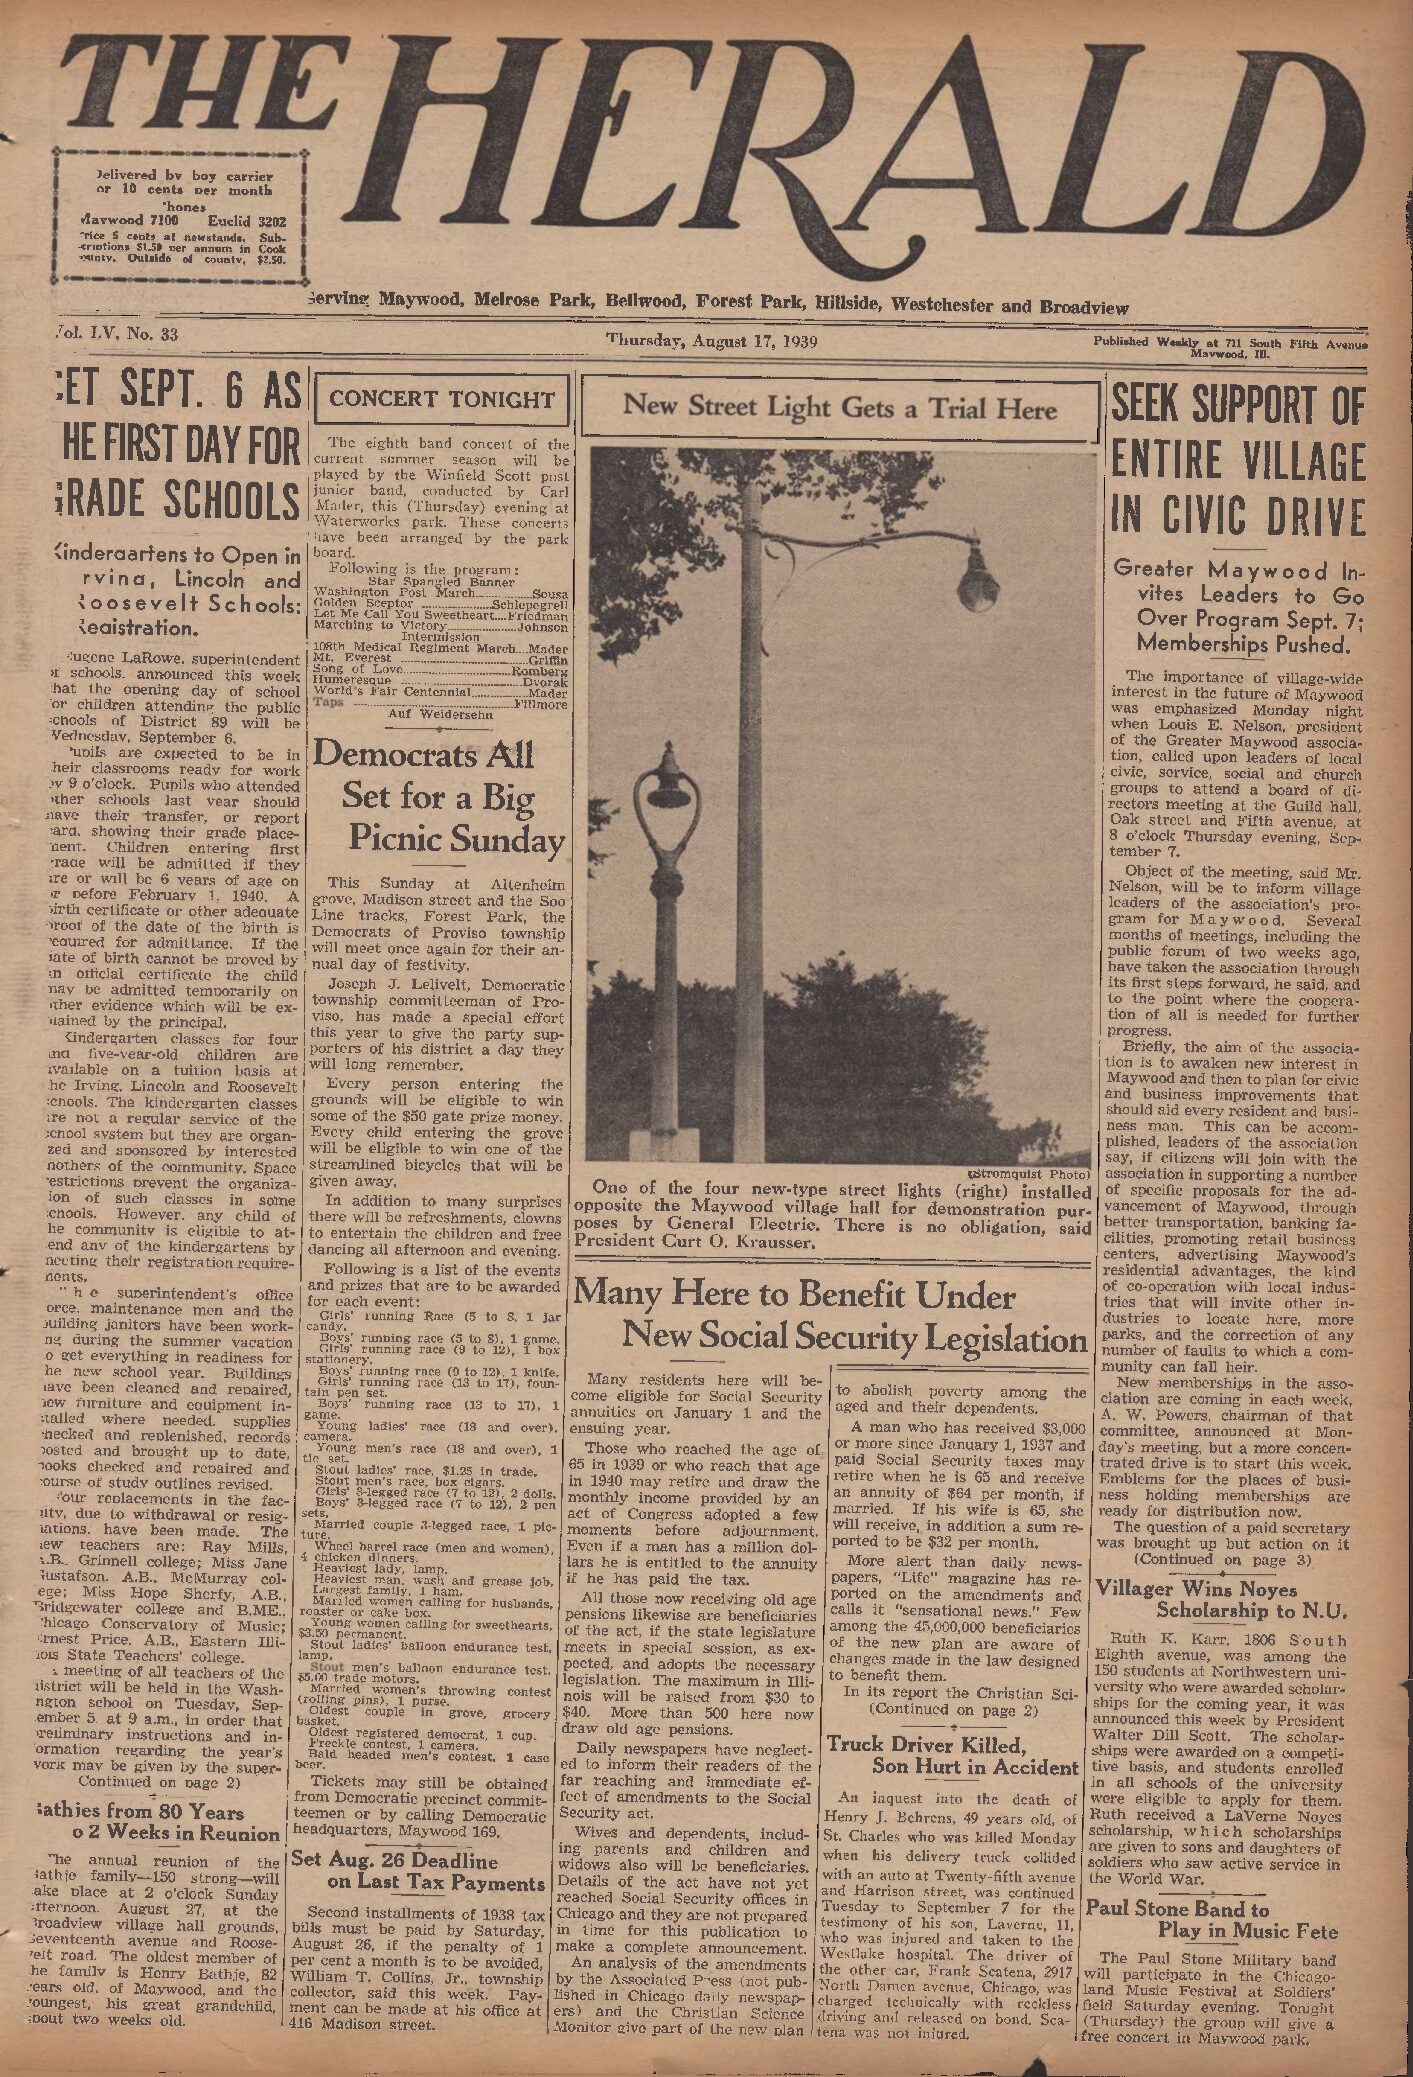 The Herald – 19390817